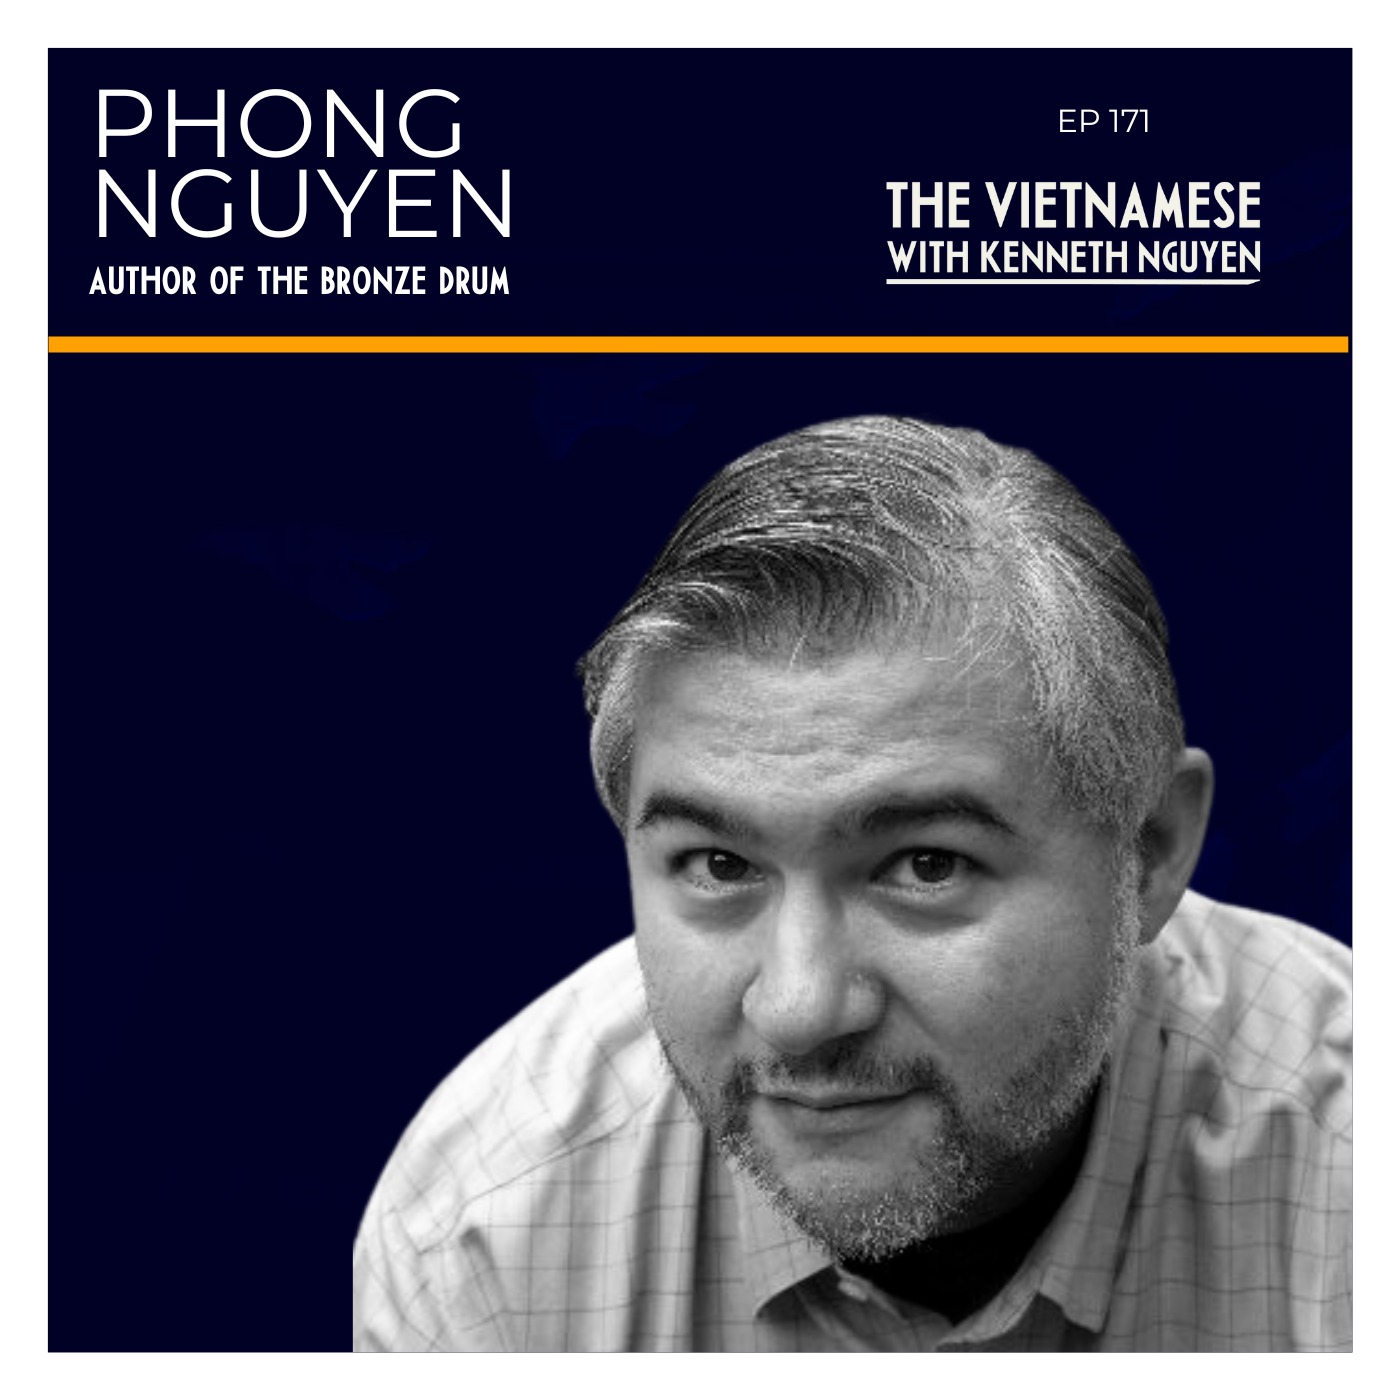 171 - Phong Nguyen - Author of the Bronze Drum